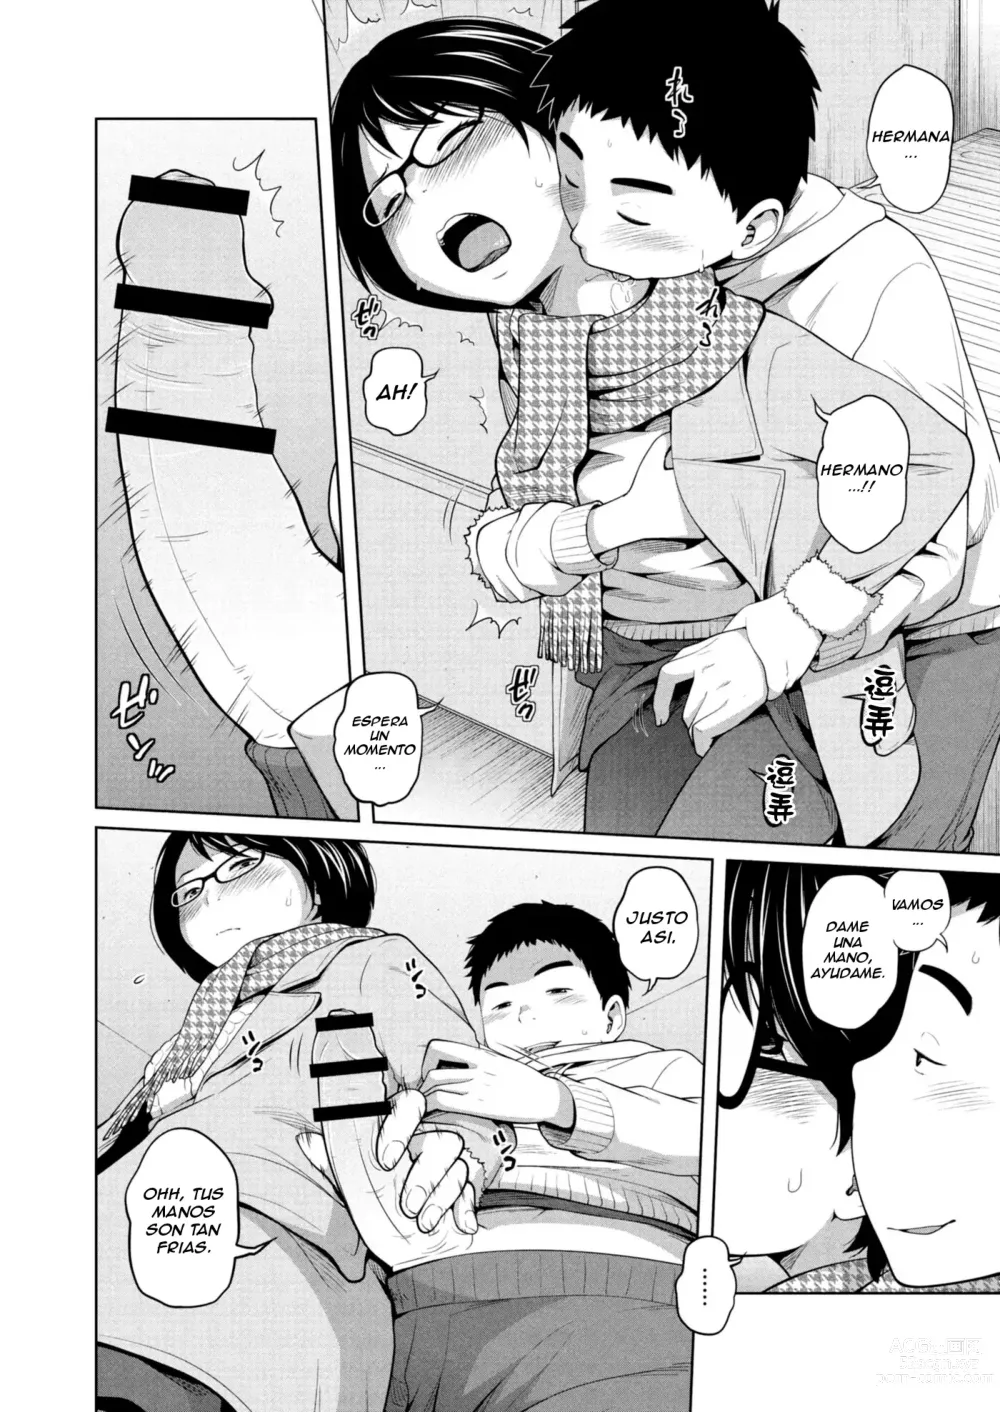 Page 4 of manga Ane Megane 7-wa Yowami wa Tsuyomi!?